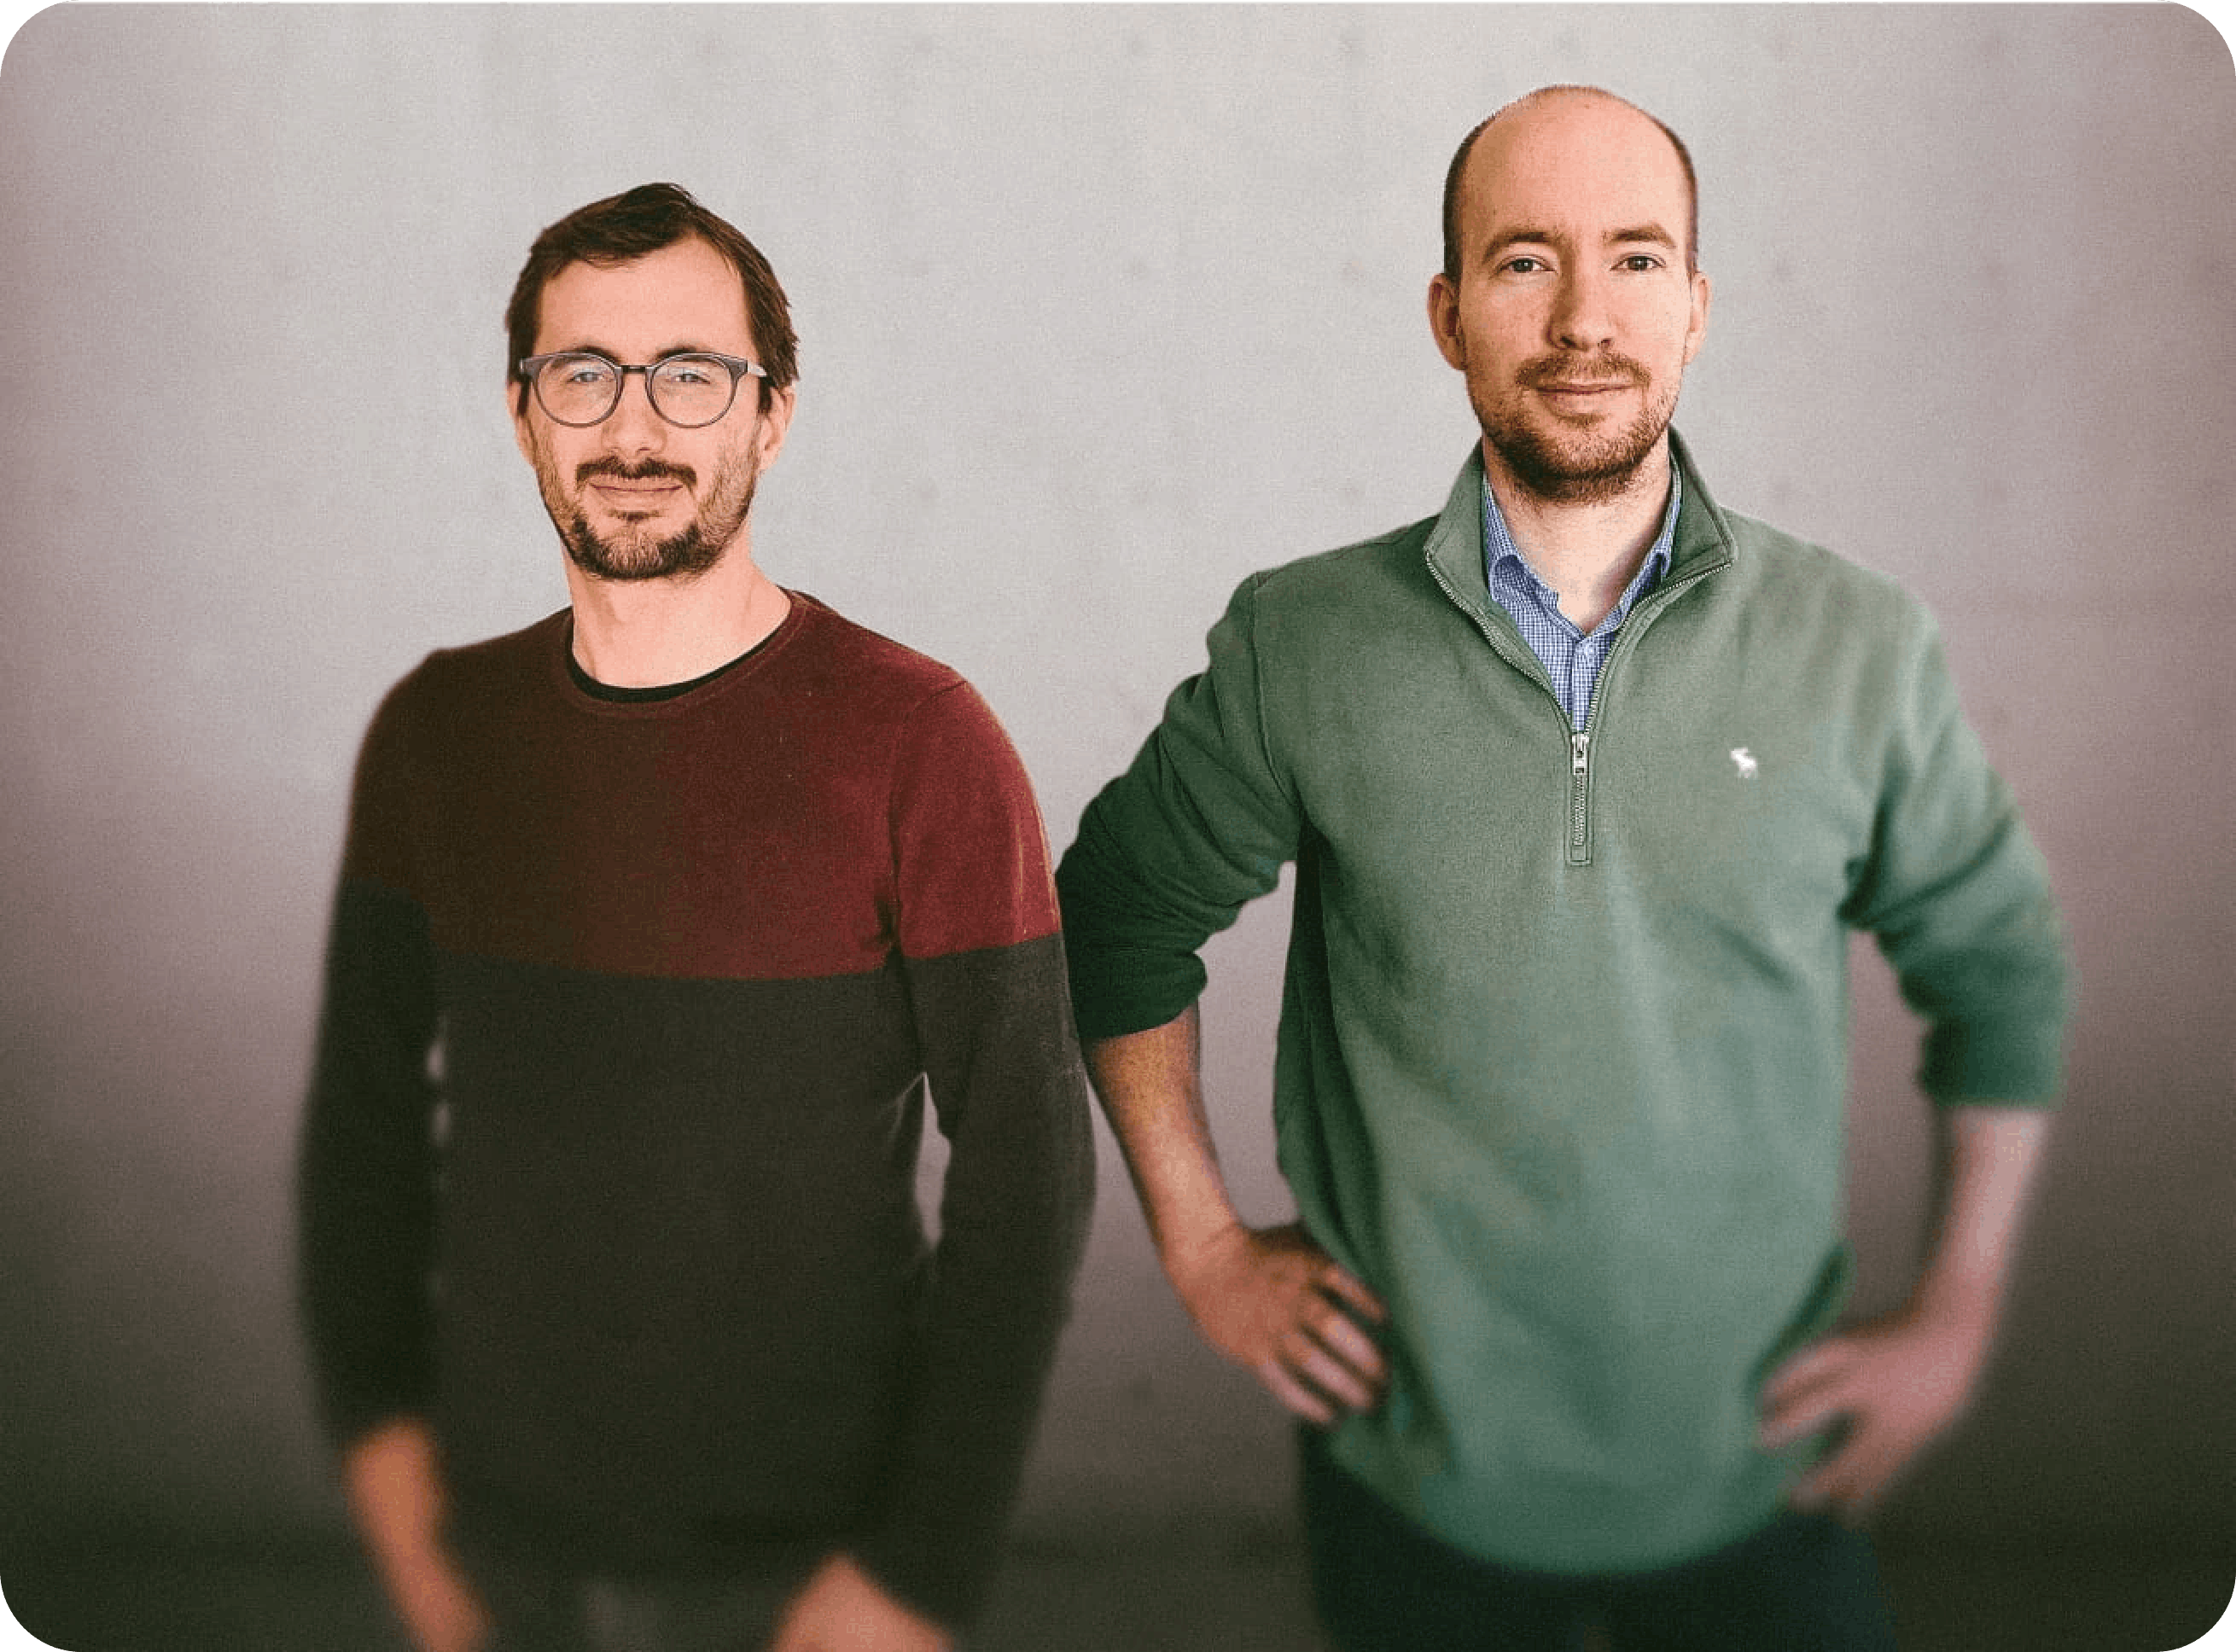 Stream founders portrait